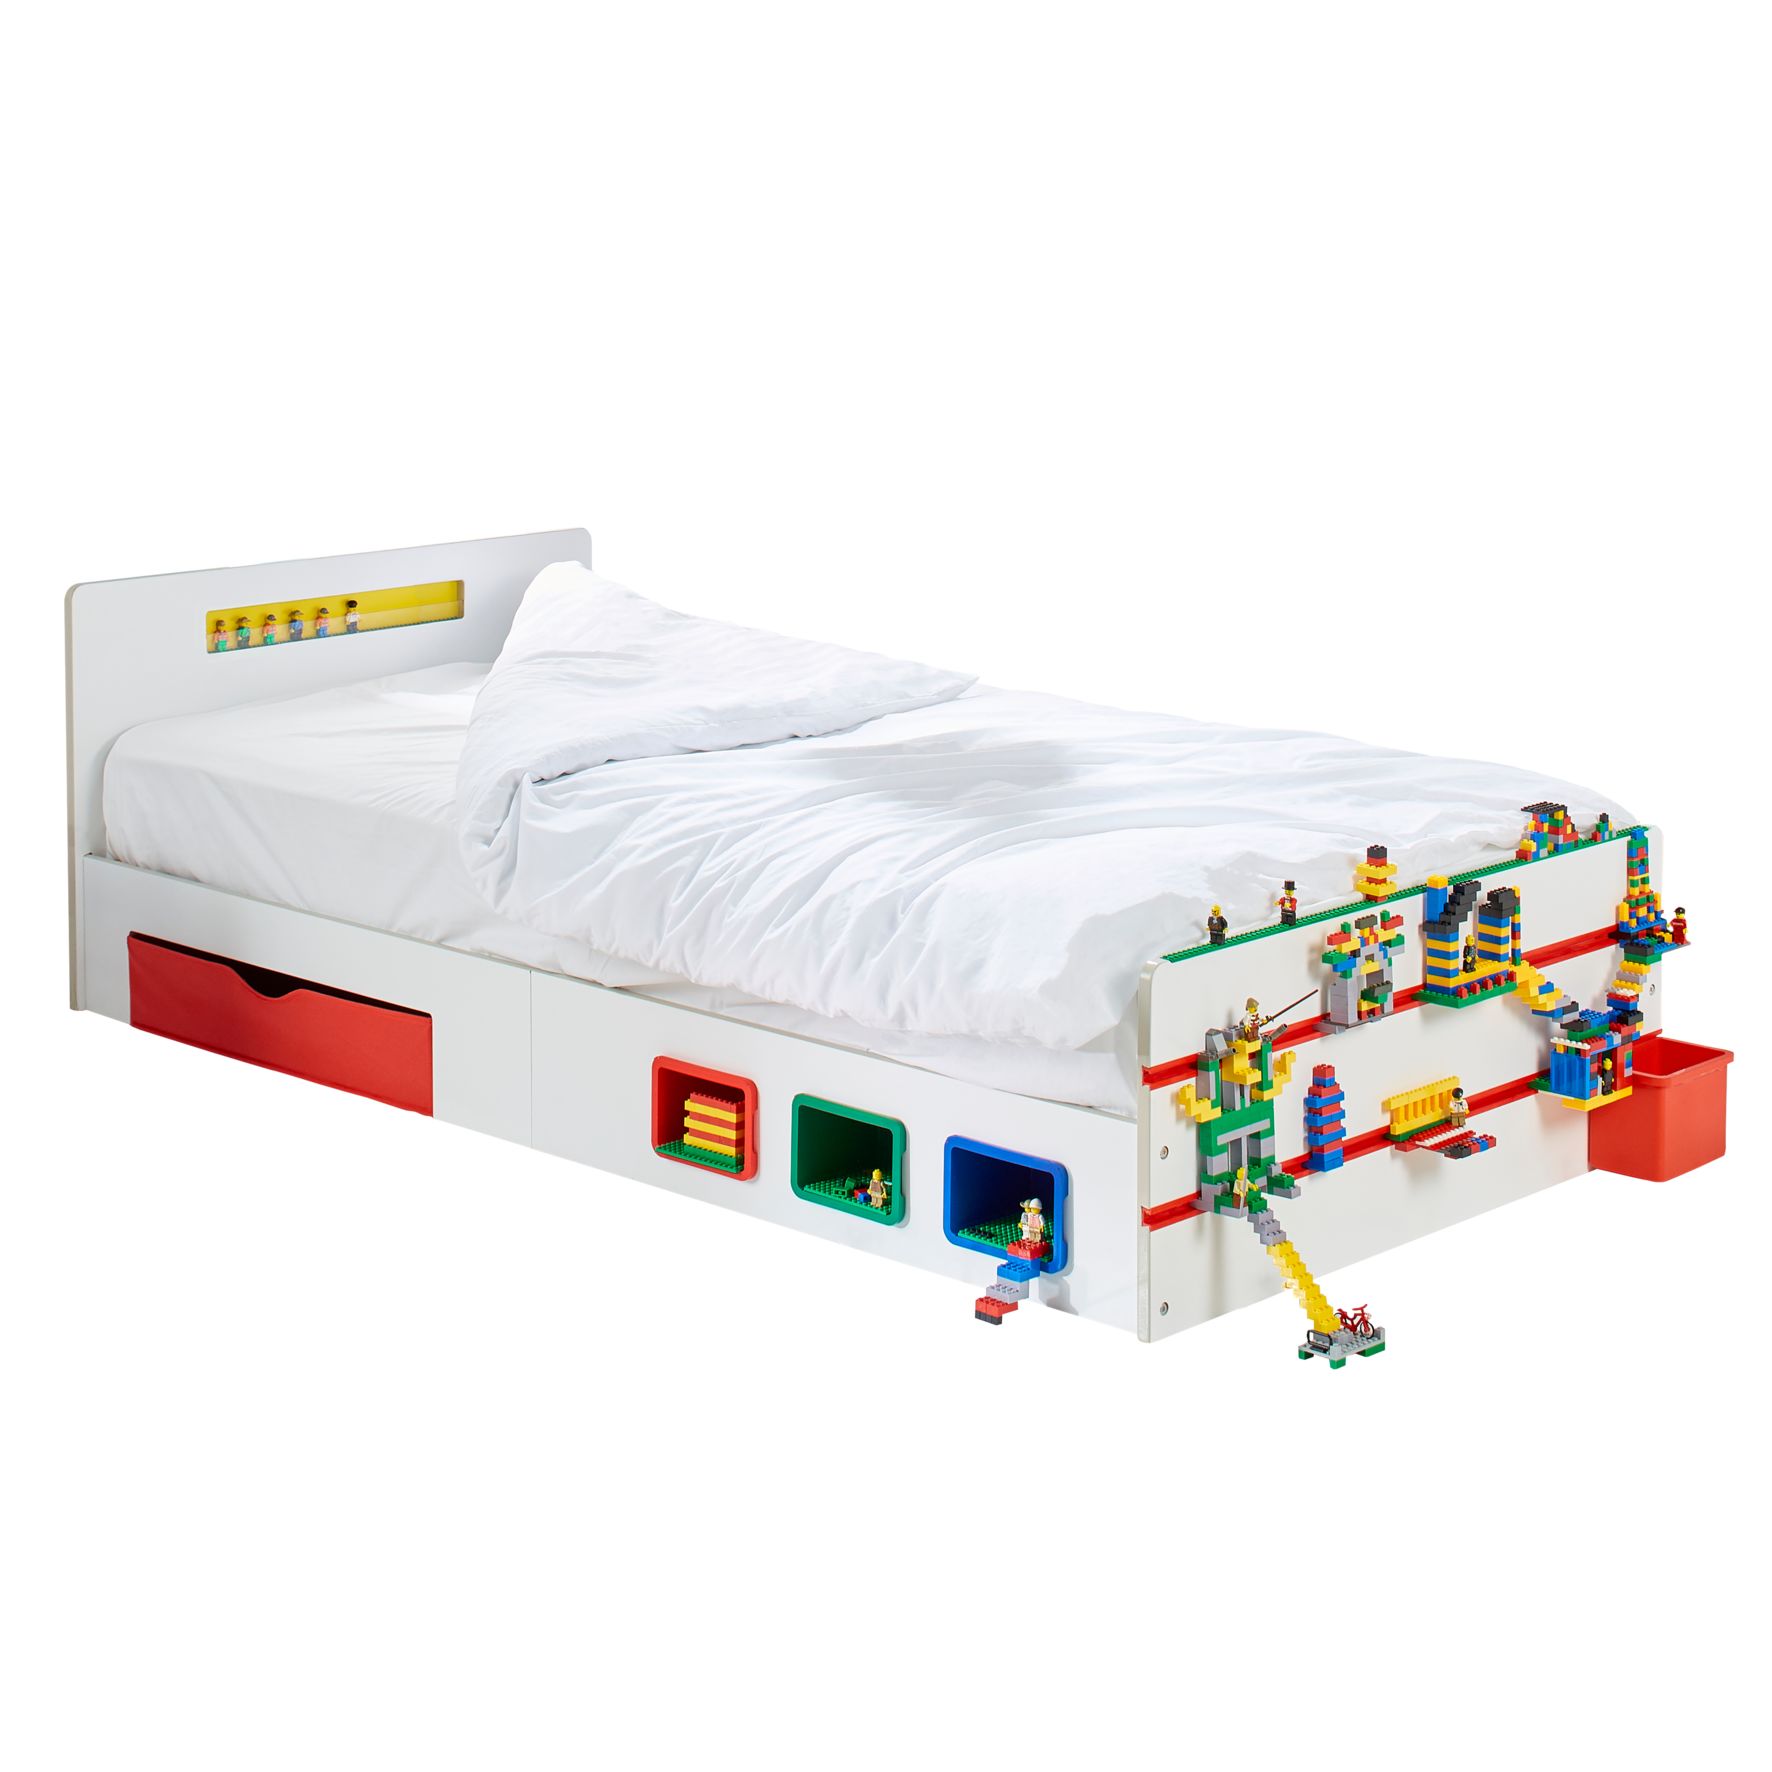 Room 2 Build - Kids 2m Single Bed with Storage (525RTB01EM)